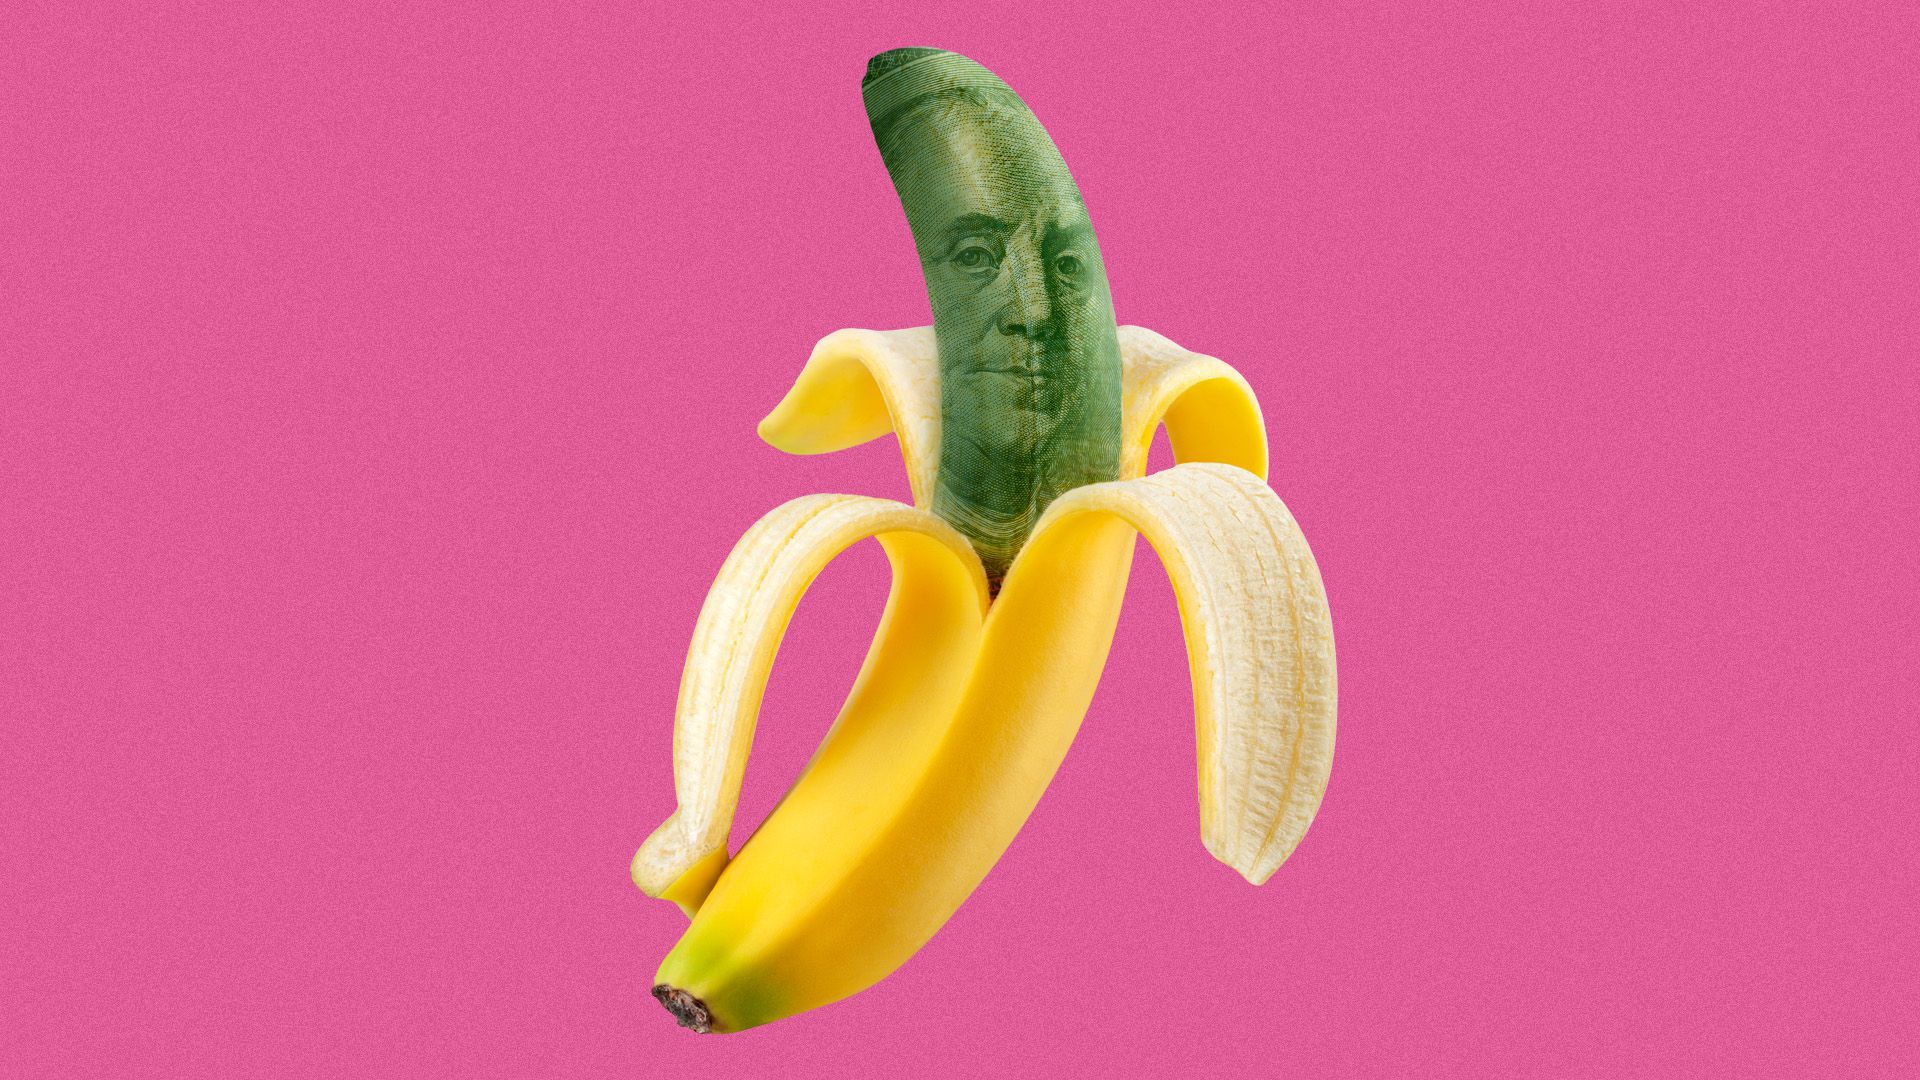 Illustration of a peeled banana made of money.